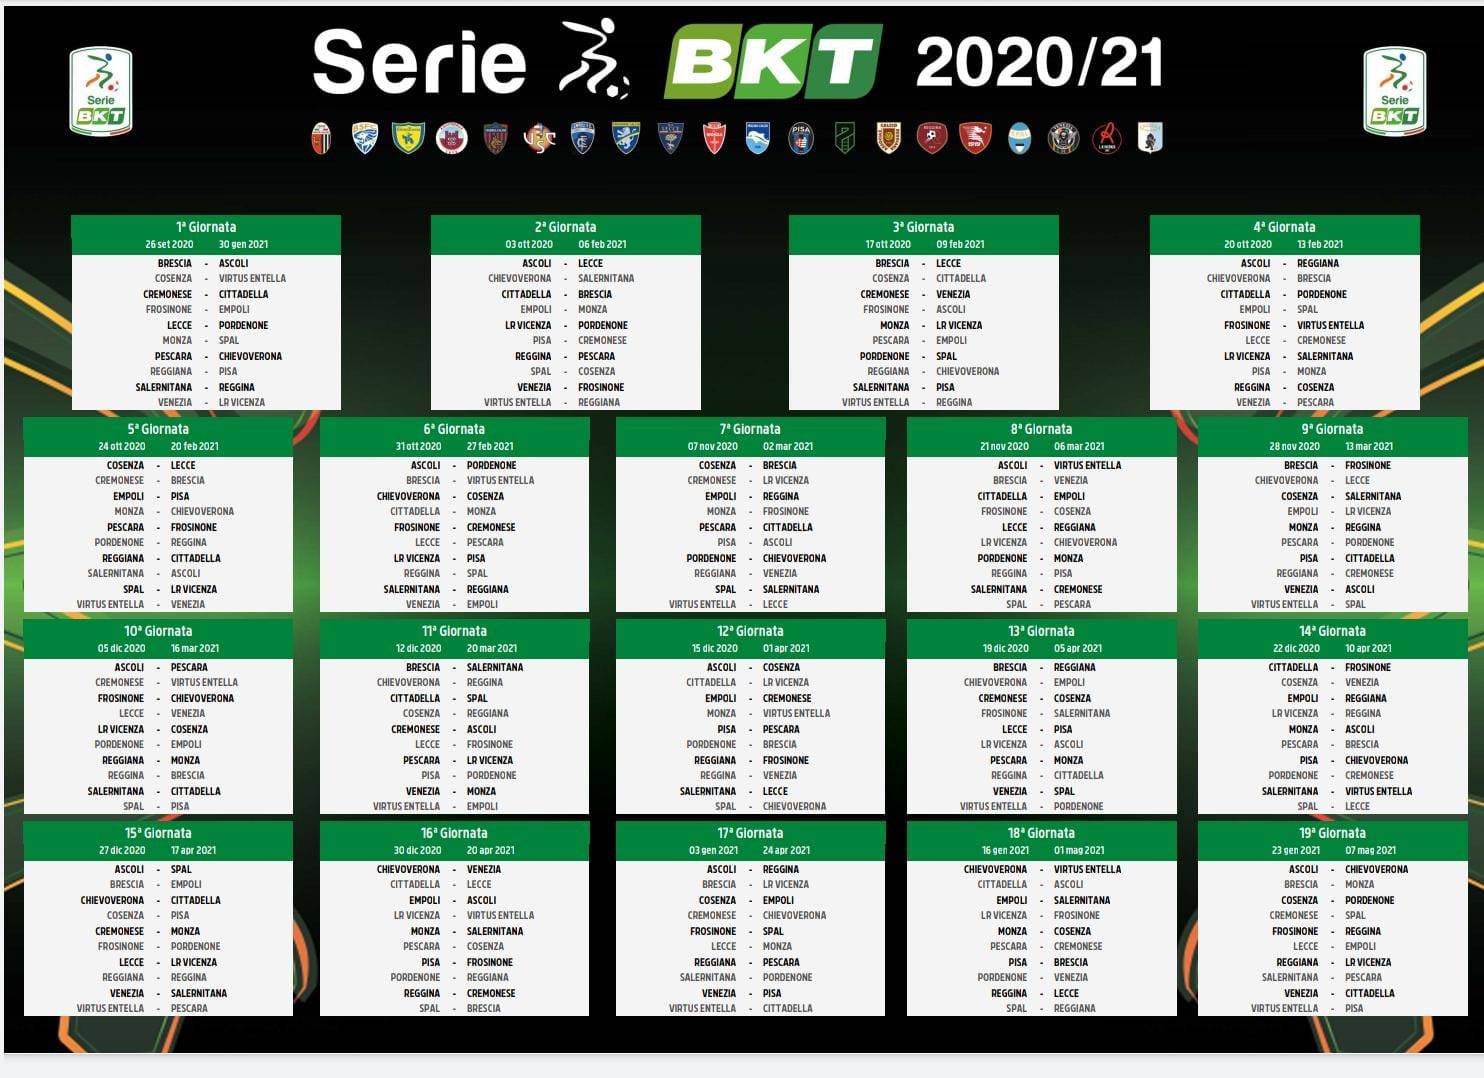 Serie B calendario completo